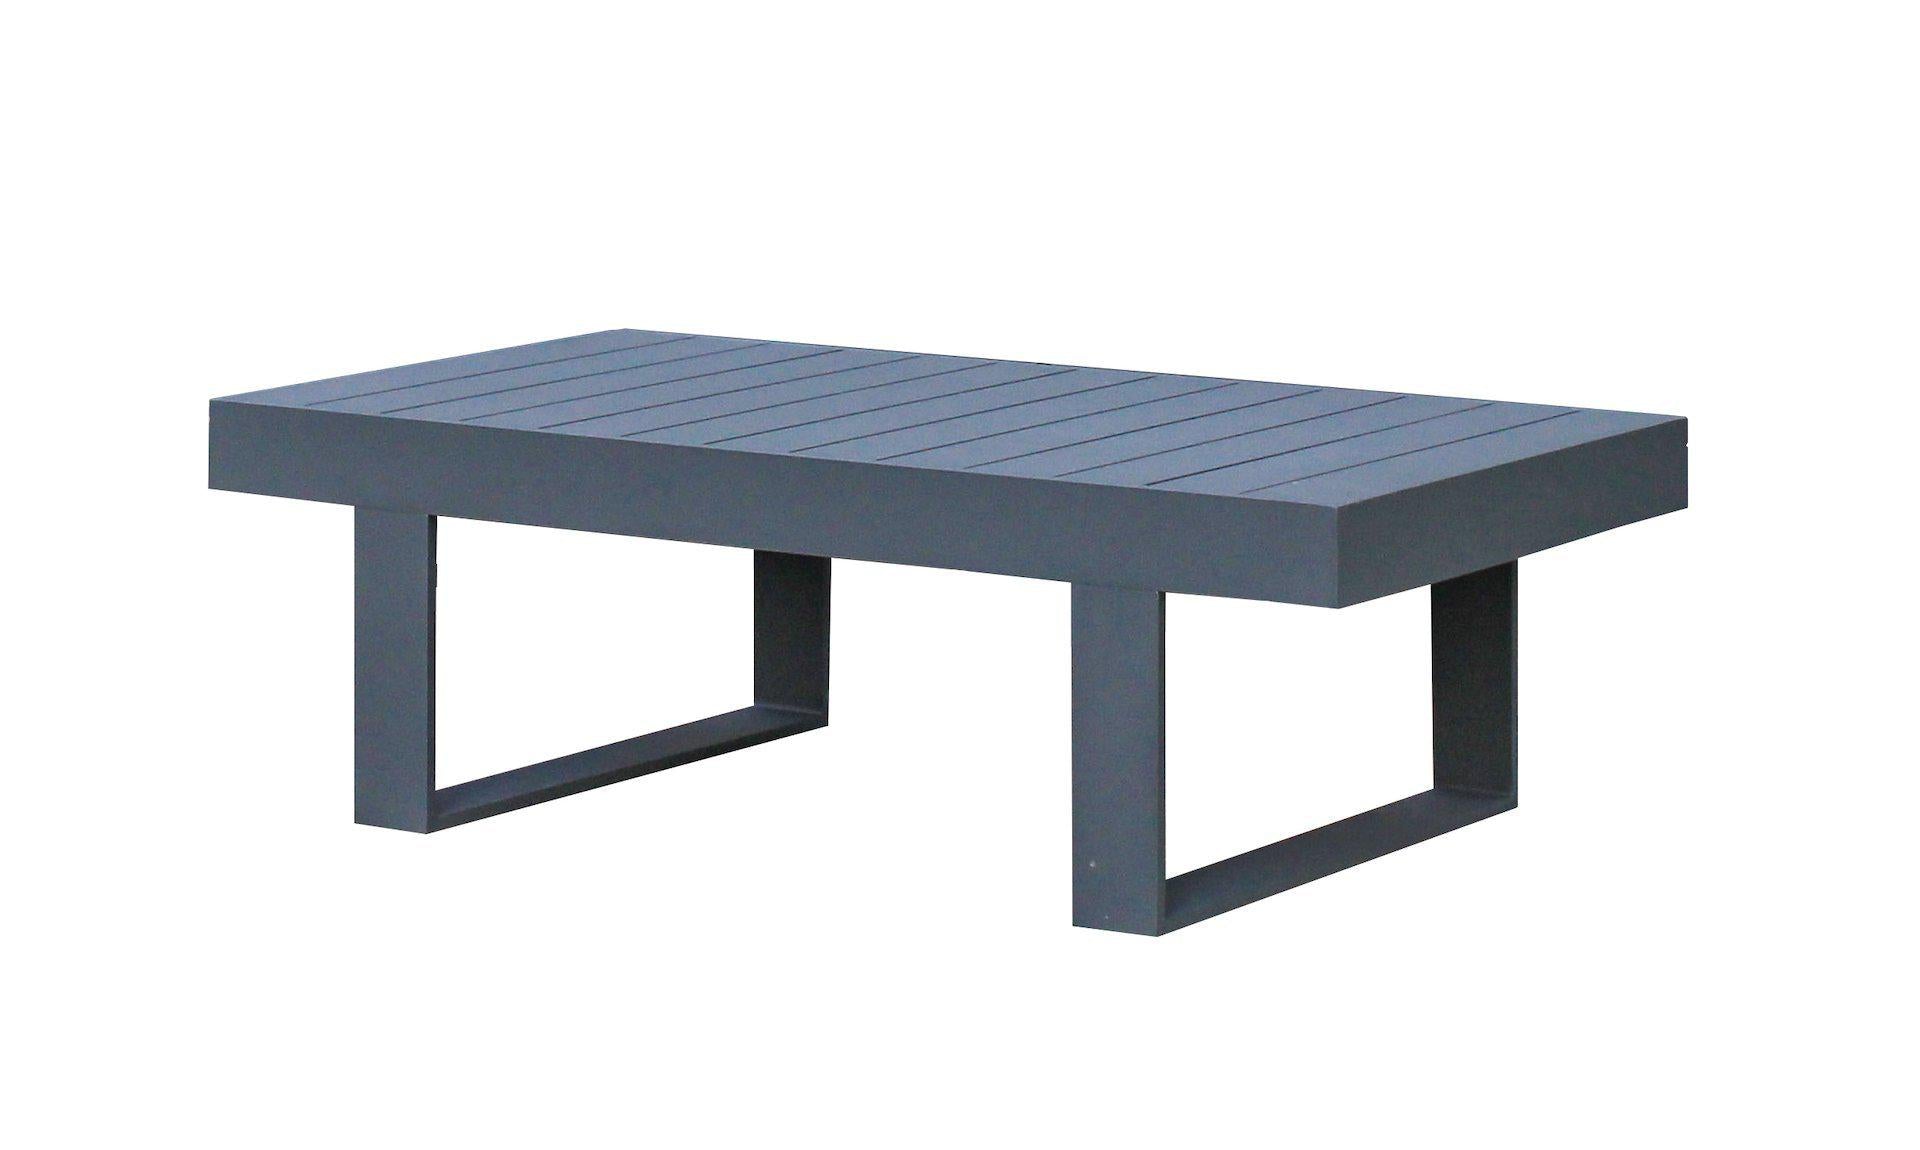 FurnitureOkay Manly Aluminium Outdoor Coffee Table — Charcoal